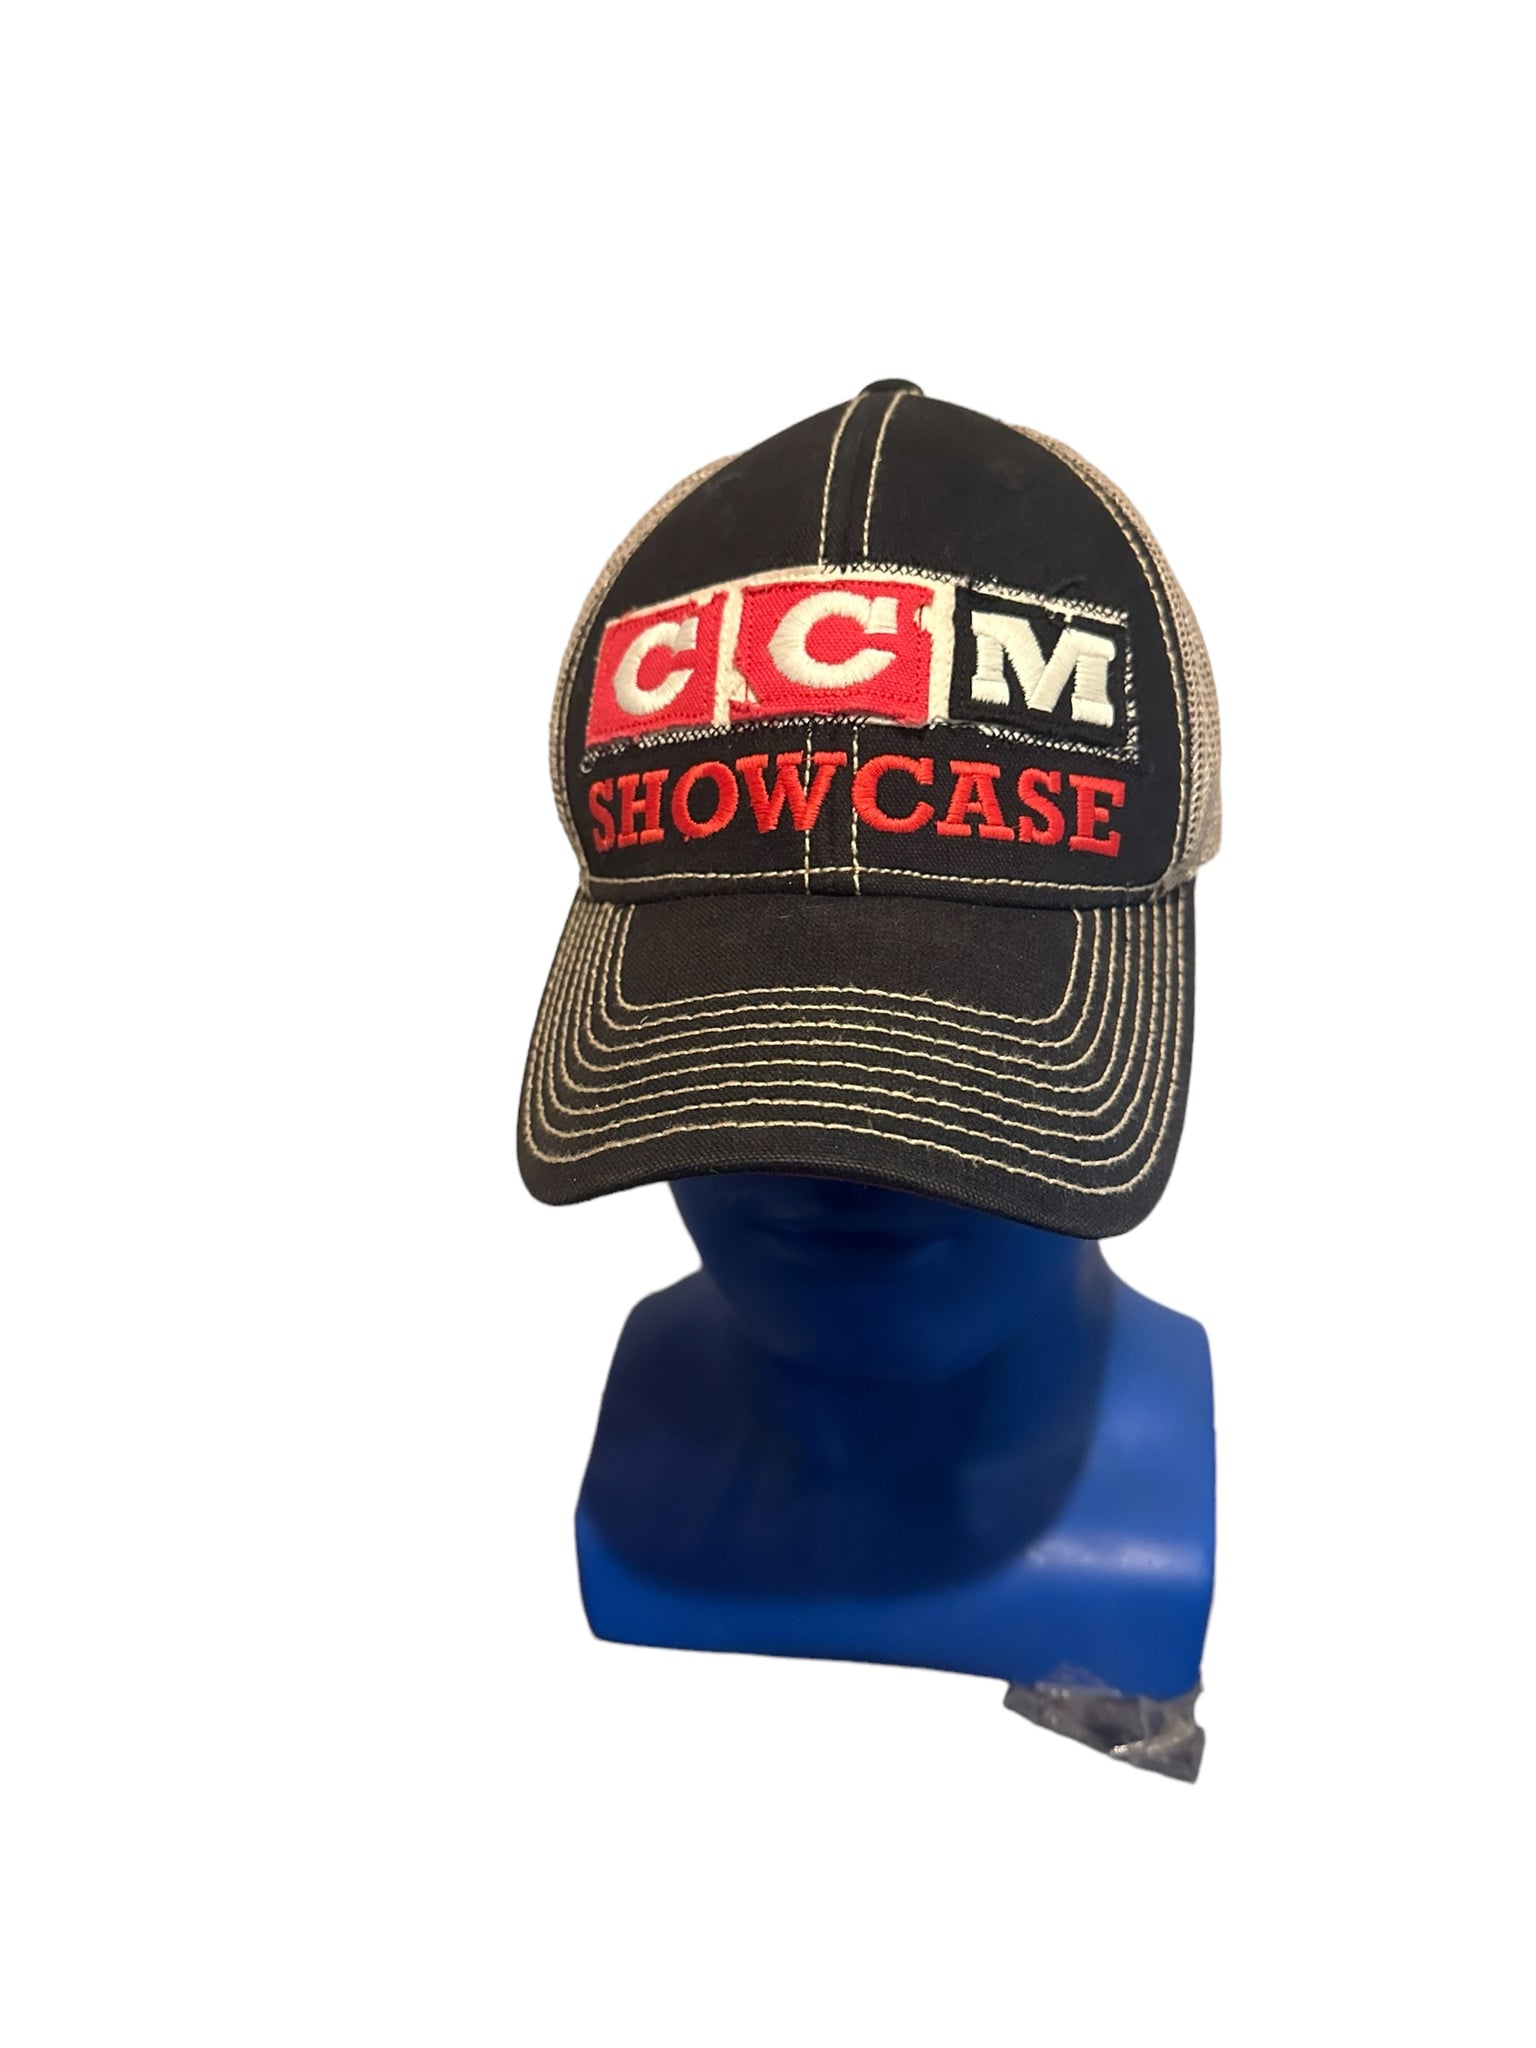 Colorado CCM SHOWCASE Hat Trucker Snapback Mesh Adult Cap Rough Cut Logos  NHL